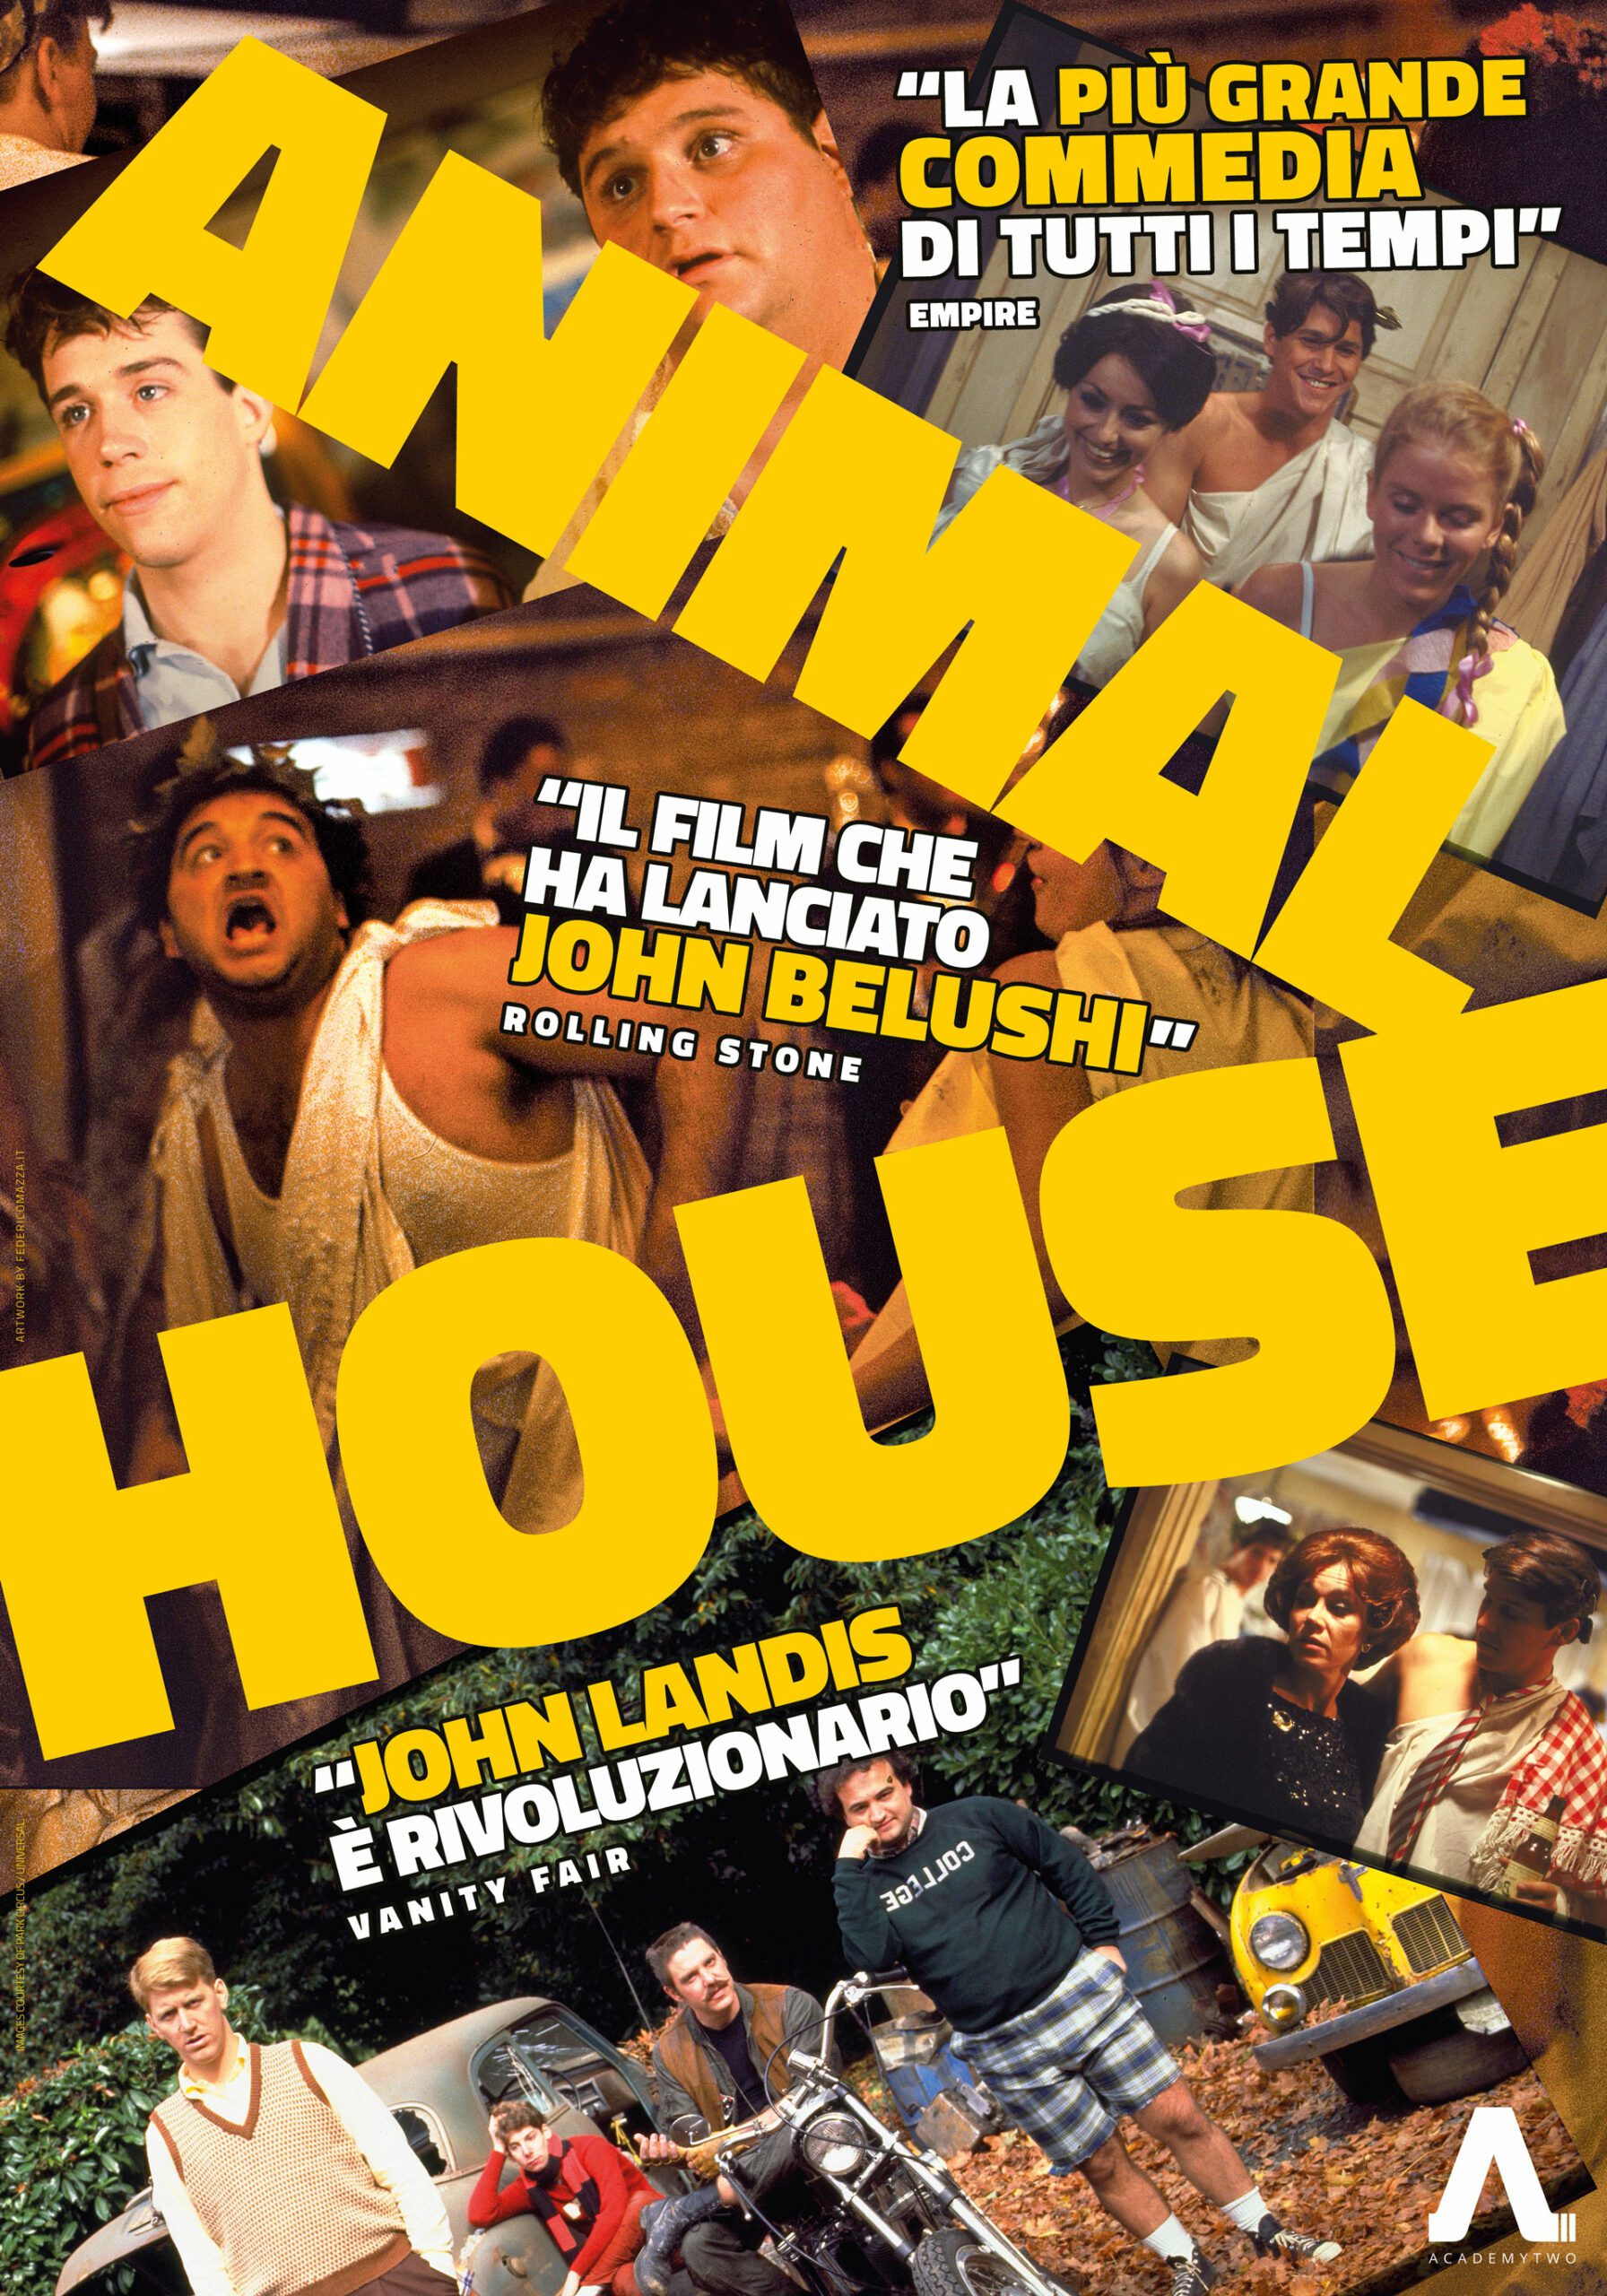 poster Animal House